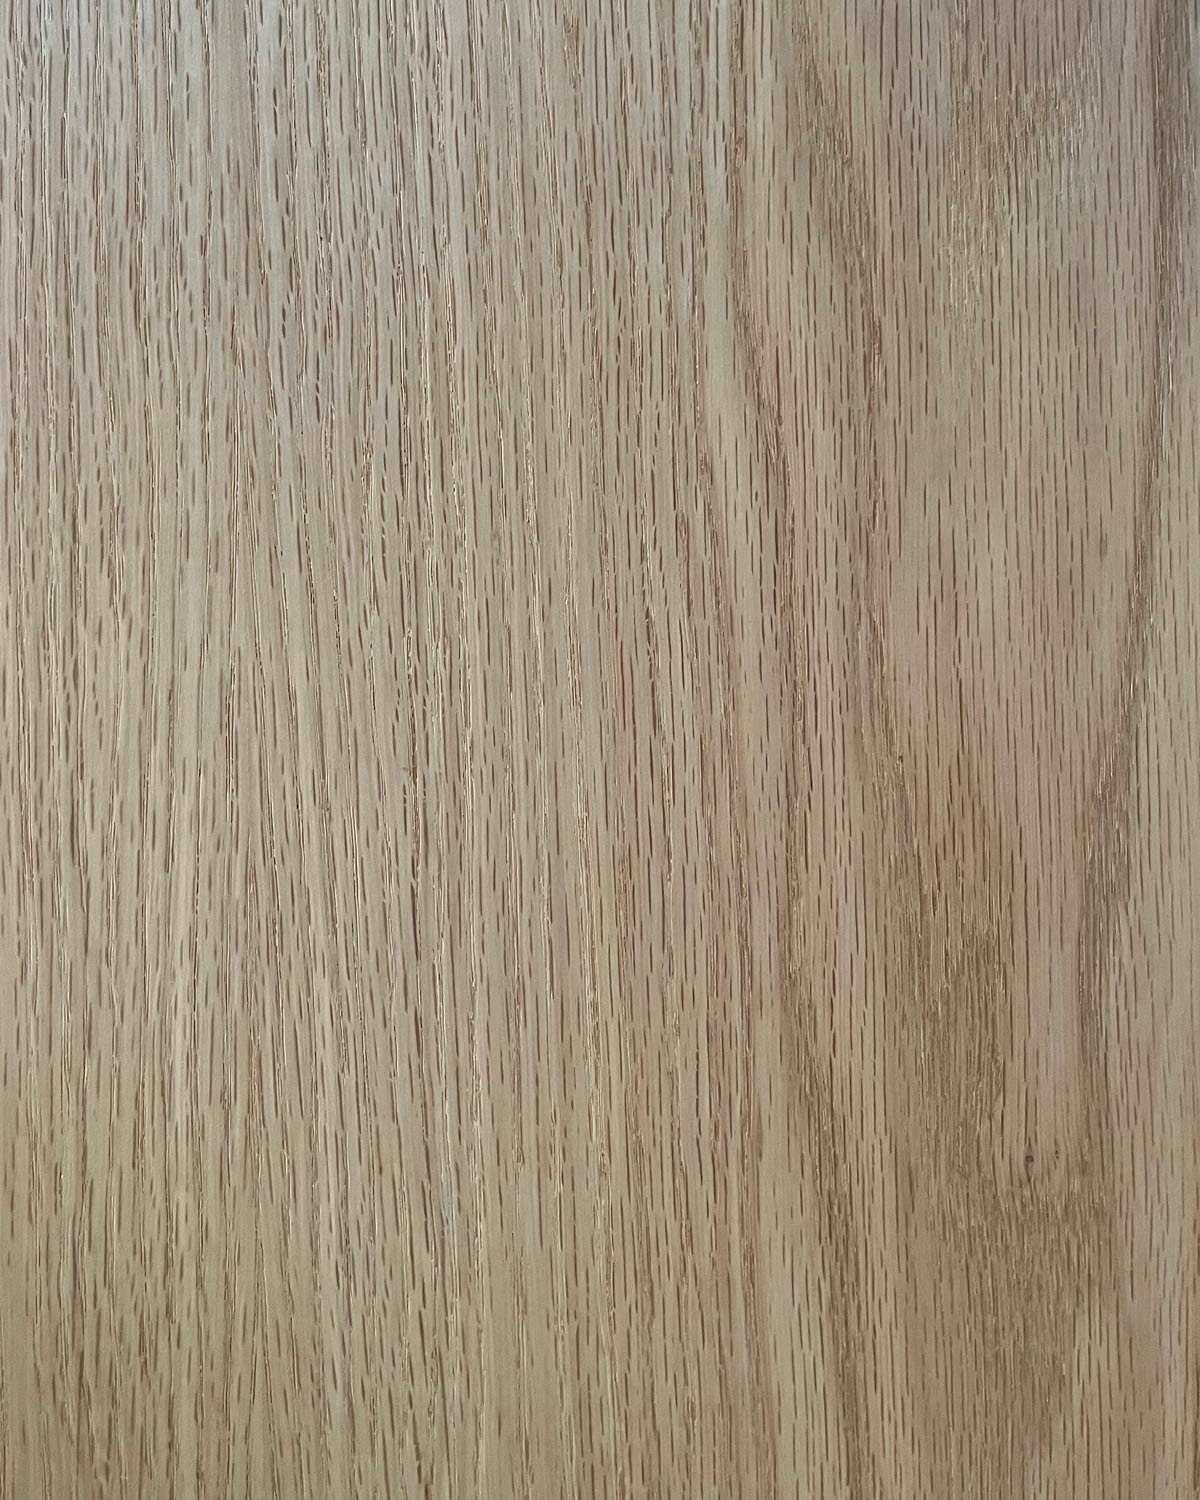 Bleached Oak 1.75" thick Cabinet Top / Slab Shelf